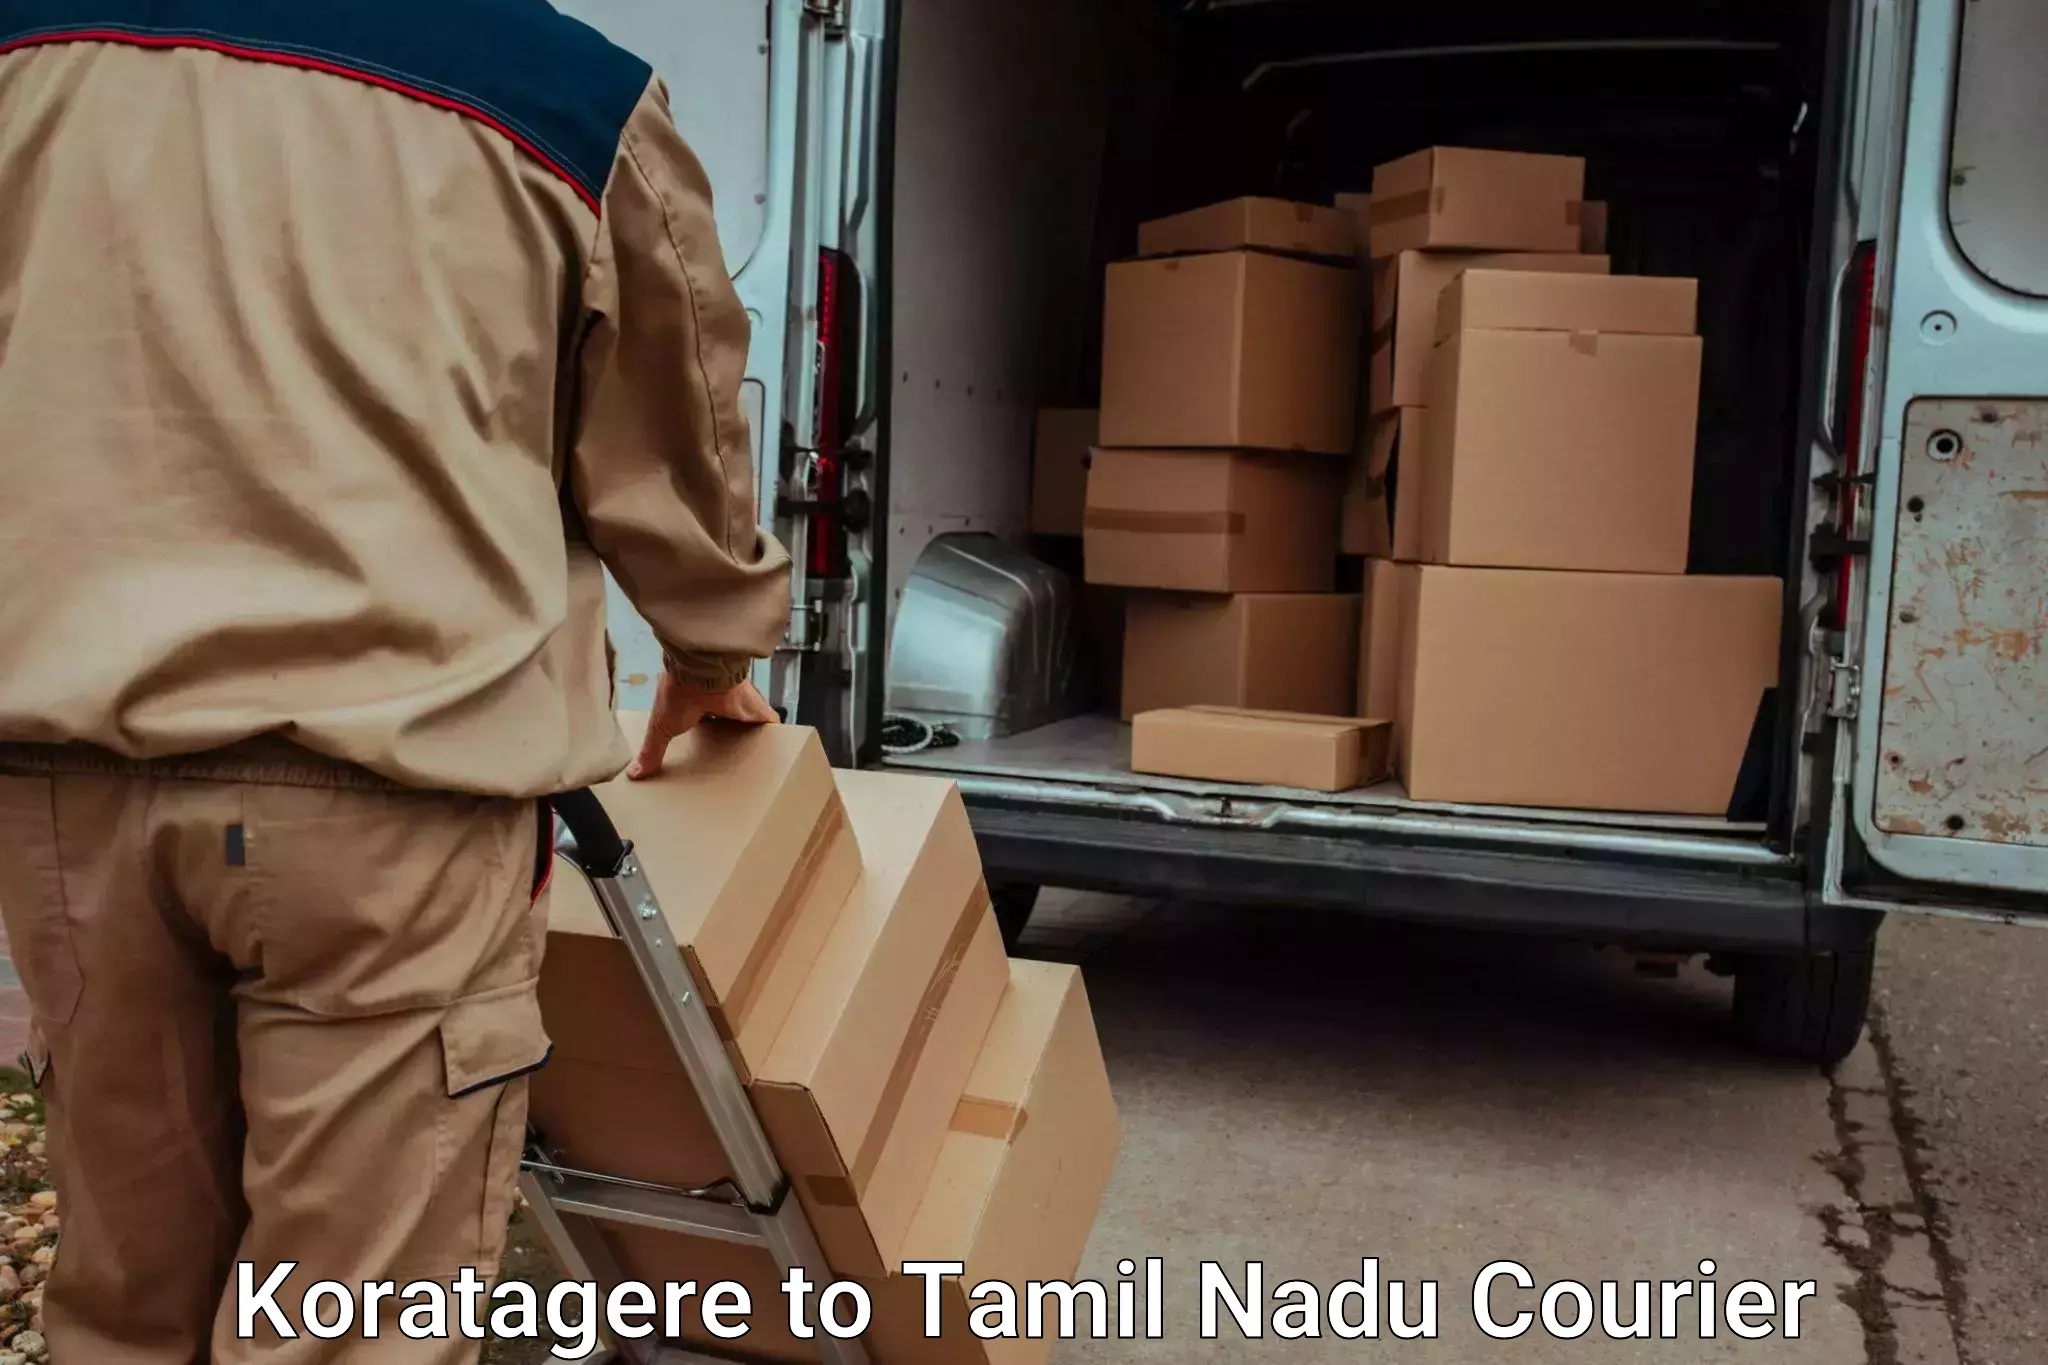 Furniture moving experts Koratagere to Palladam